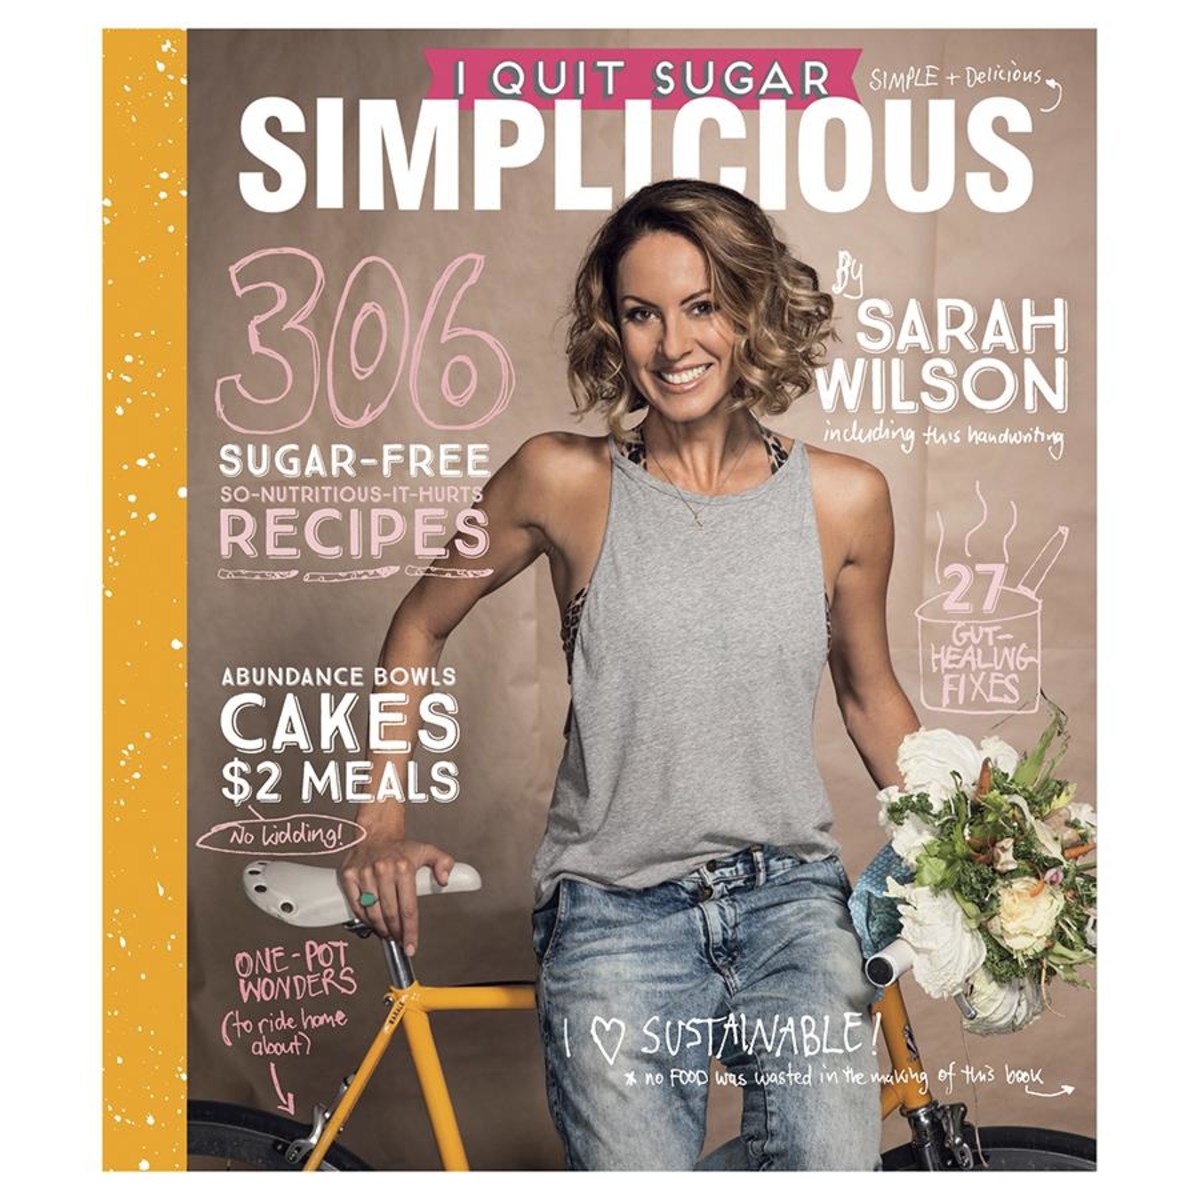 I Quit Sugar: Simplicious by Sarah Wilson - Book